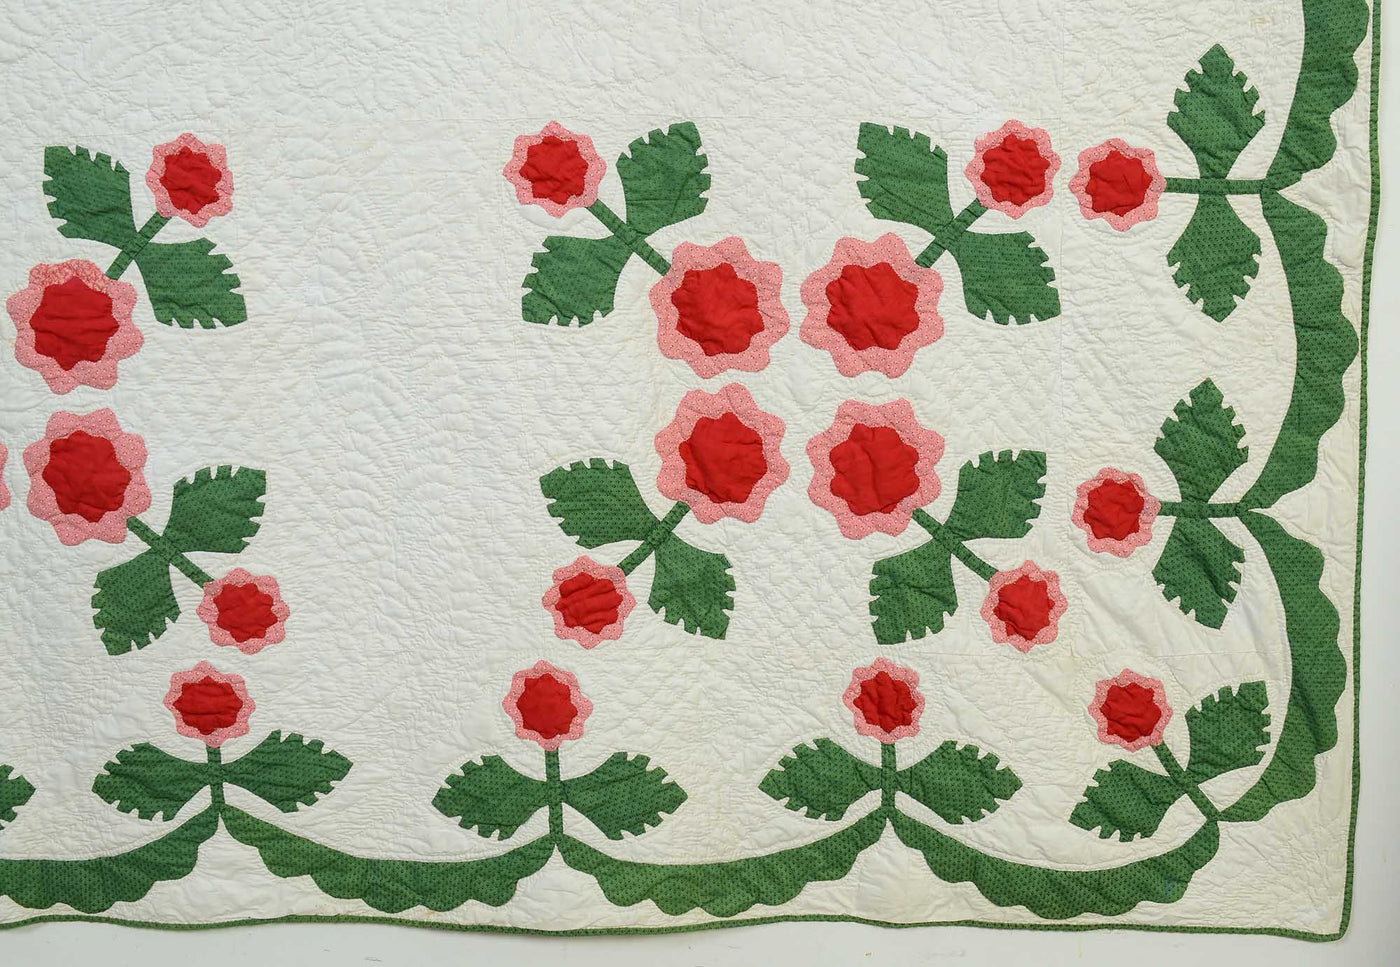 floral-applique-quilt-1410065-right-bottom-corner-6